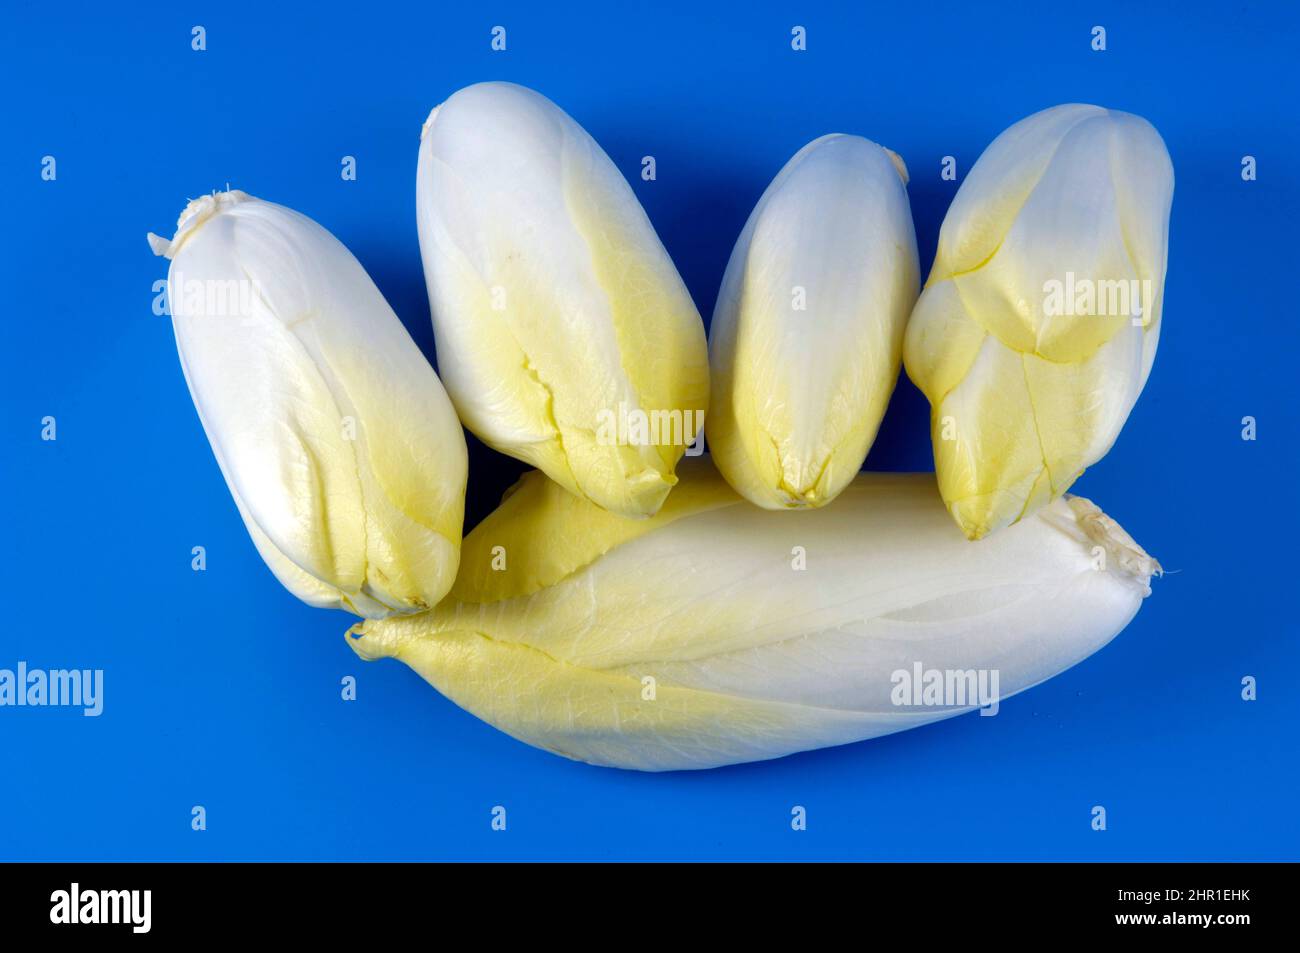 witloof chicory, Belgian endive, succory (Cichorium intybus var. foliosum), sprouts Stock Photo